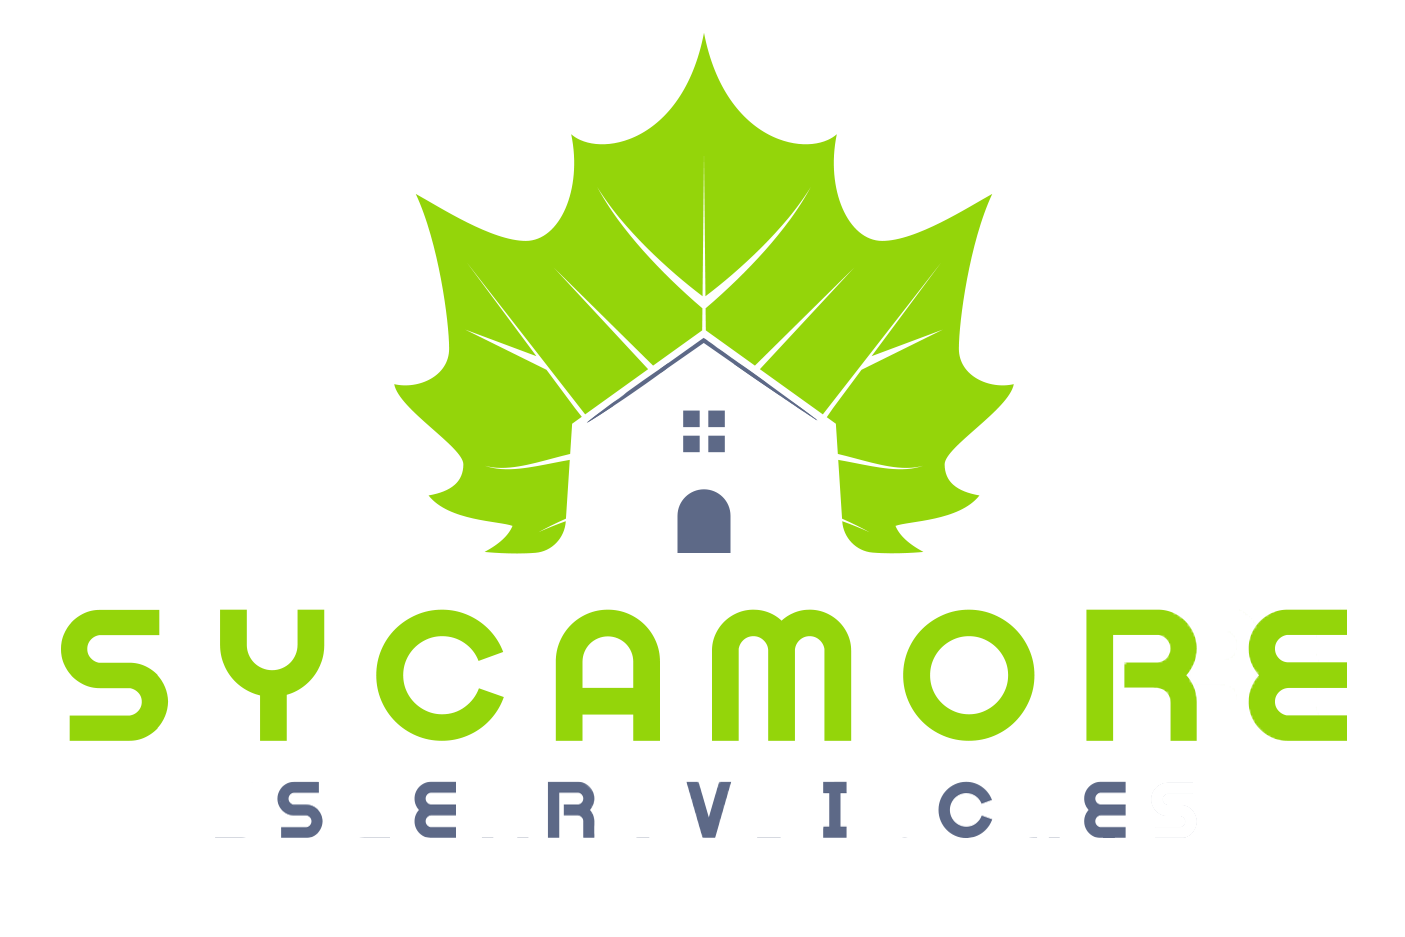 Sycamore Service LLC Logo